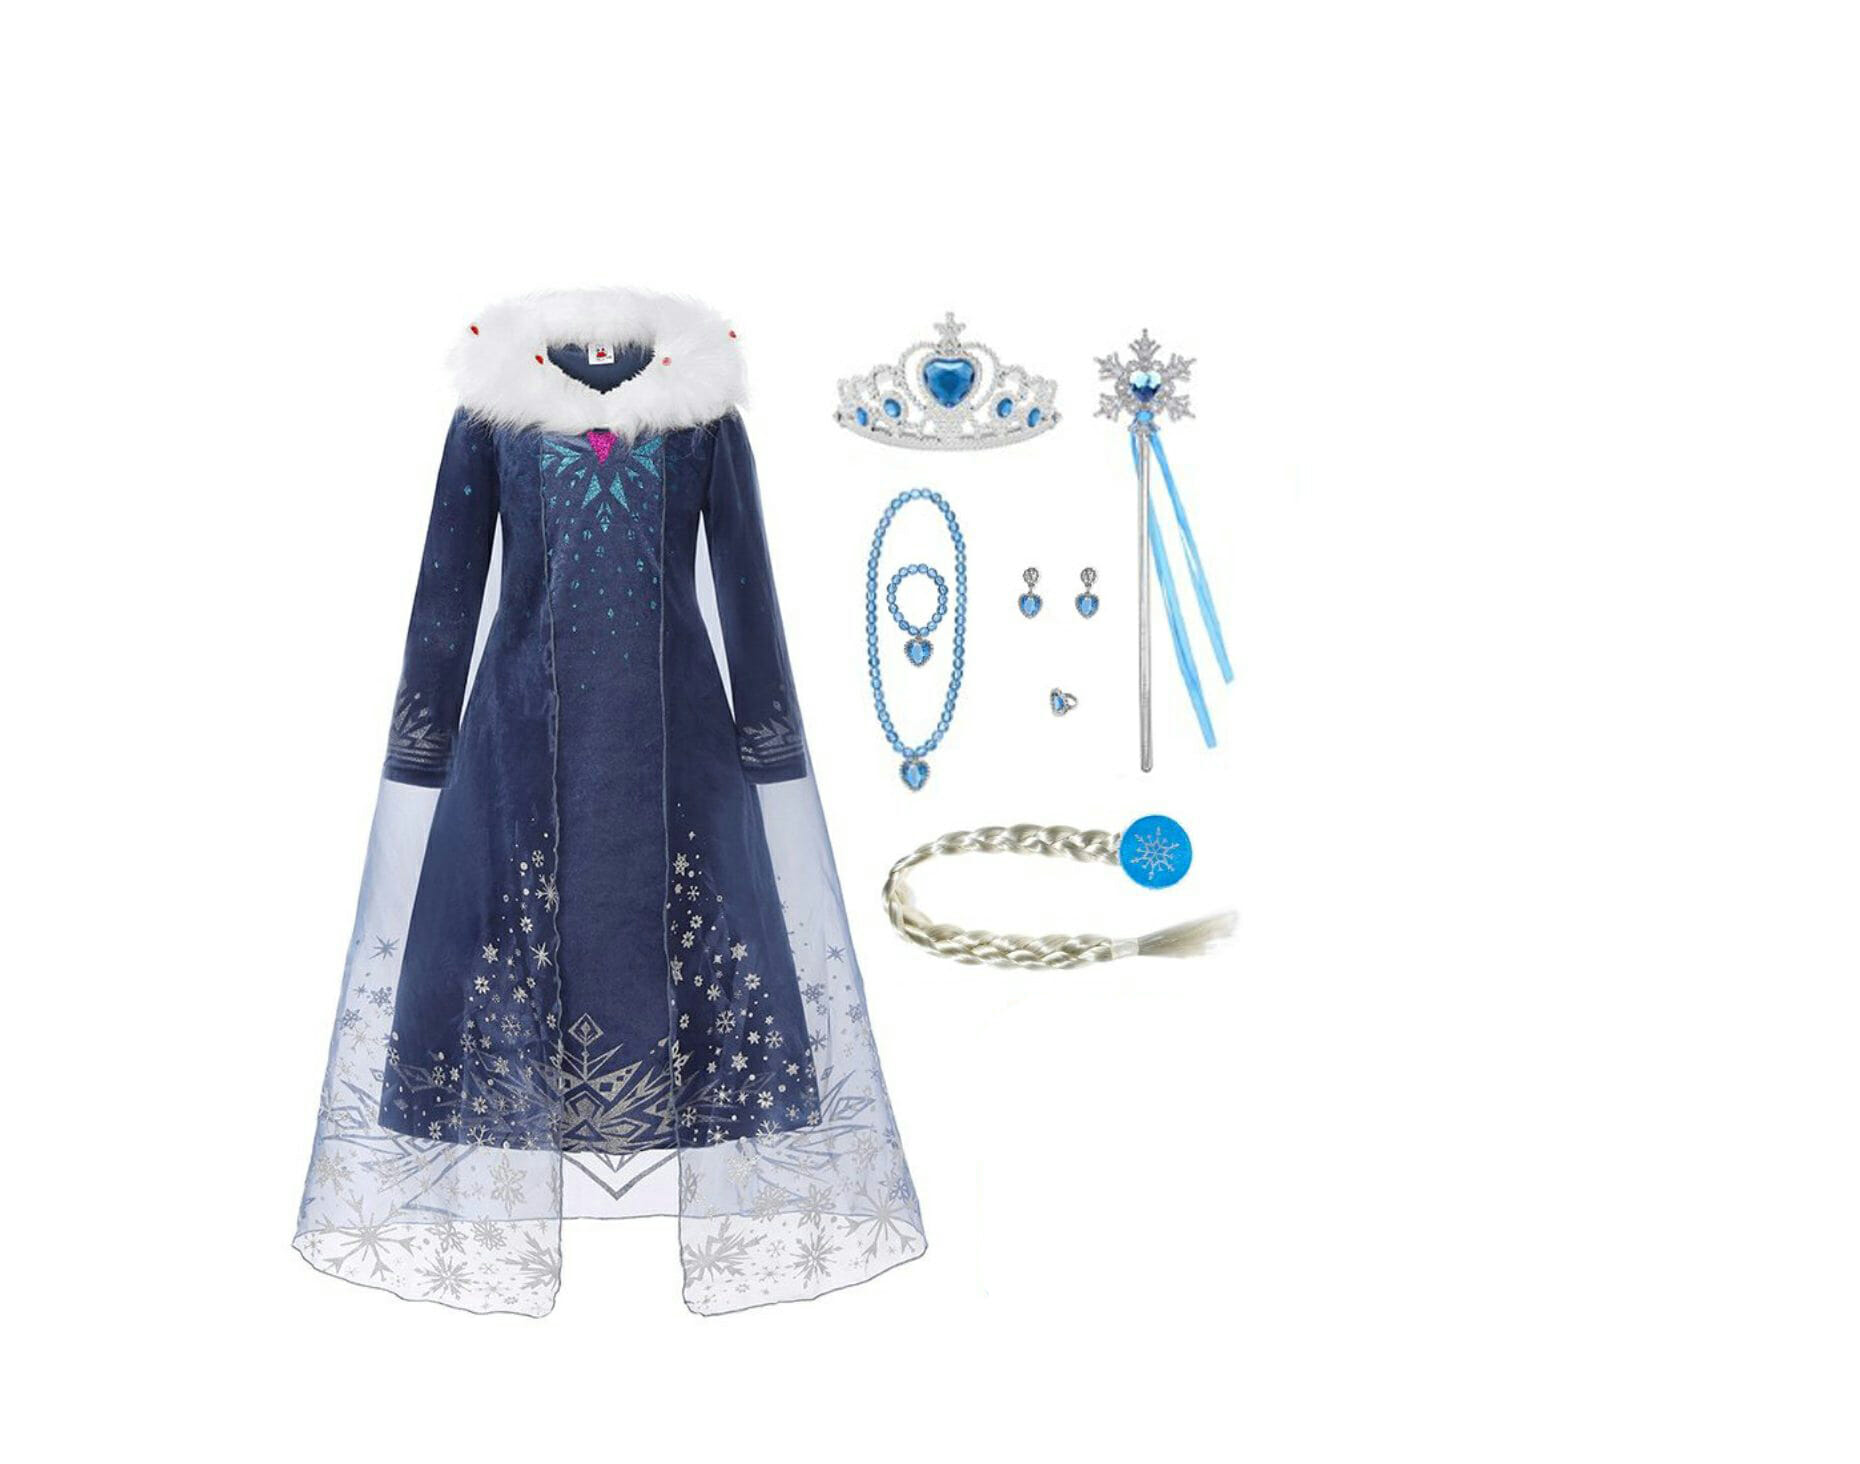 katje beschermen Huiskamer Frozen - Prinsessenjurk Meisje - Elsa blauwe jurk - Verkleedjurk -  Verkleedkleding kind